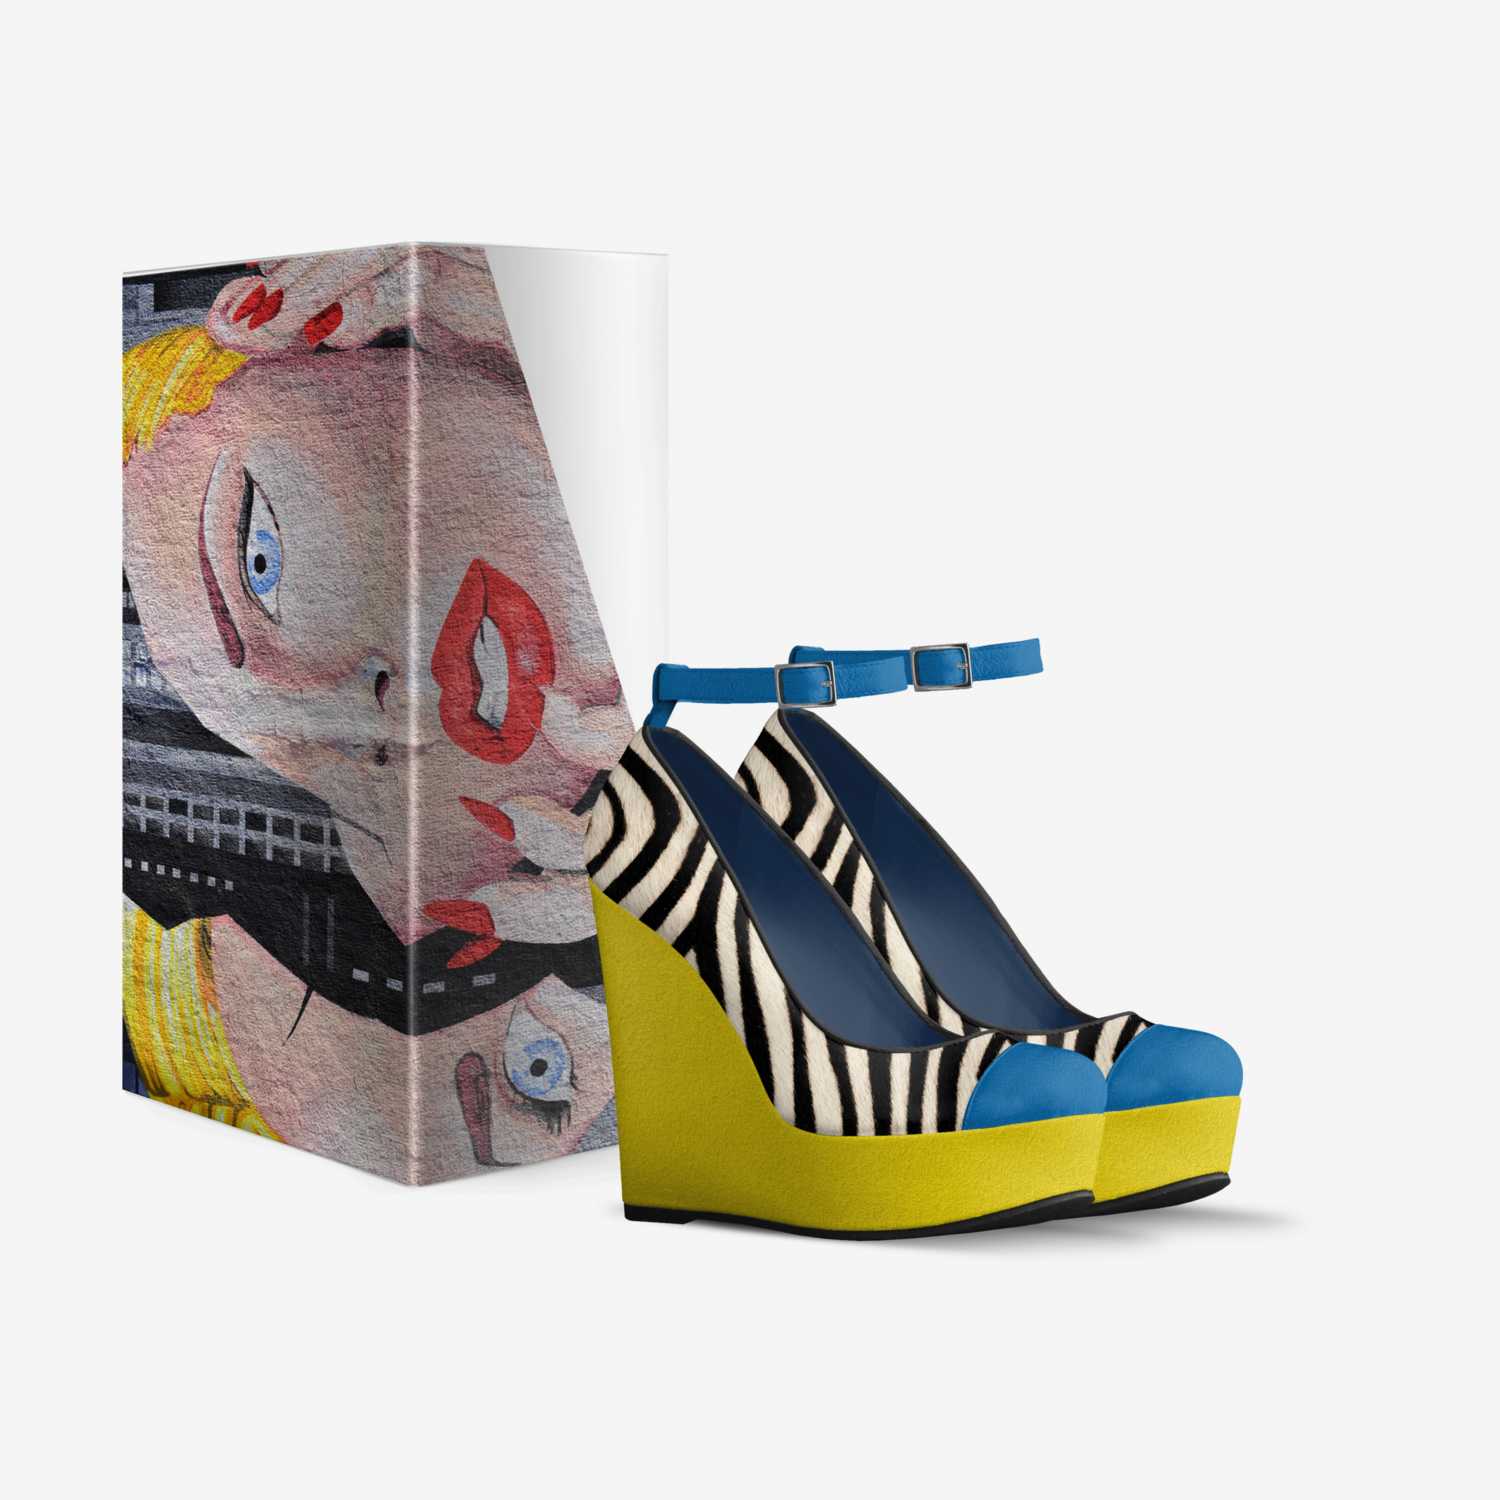 Emillio O. custom made in Italy shoes by Emillio O. | Box view